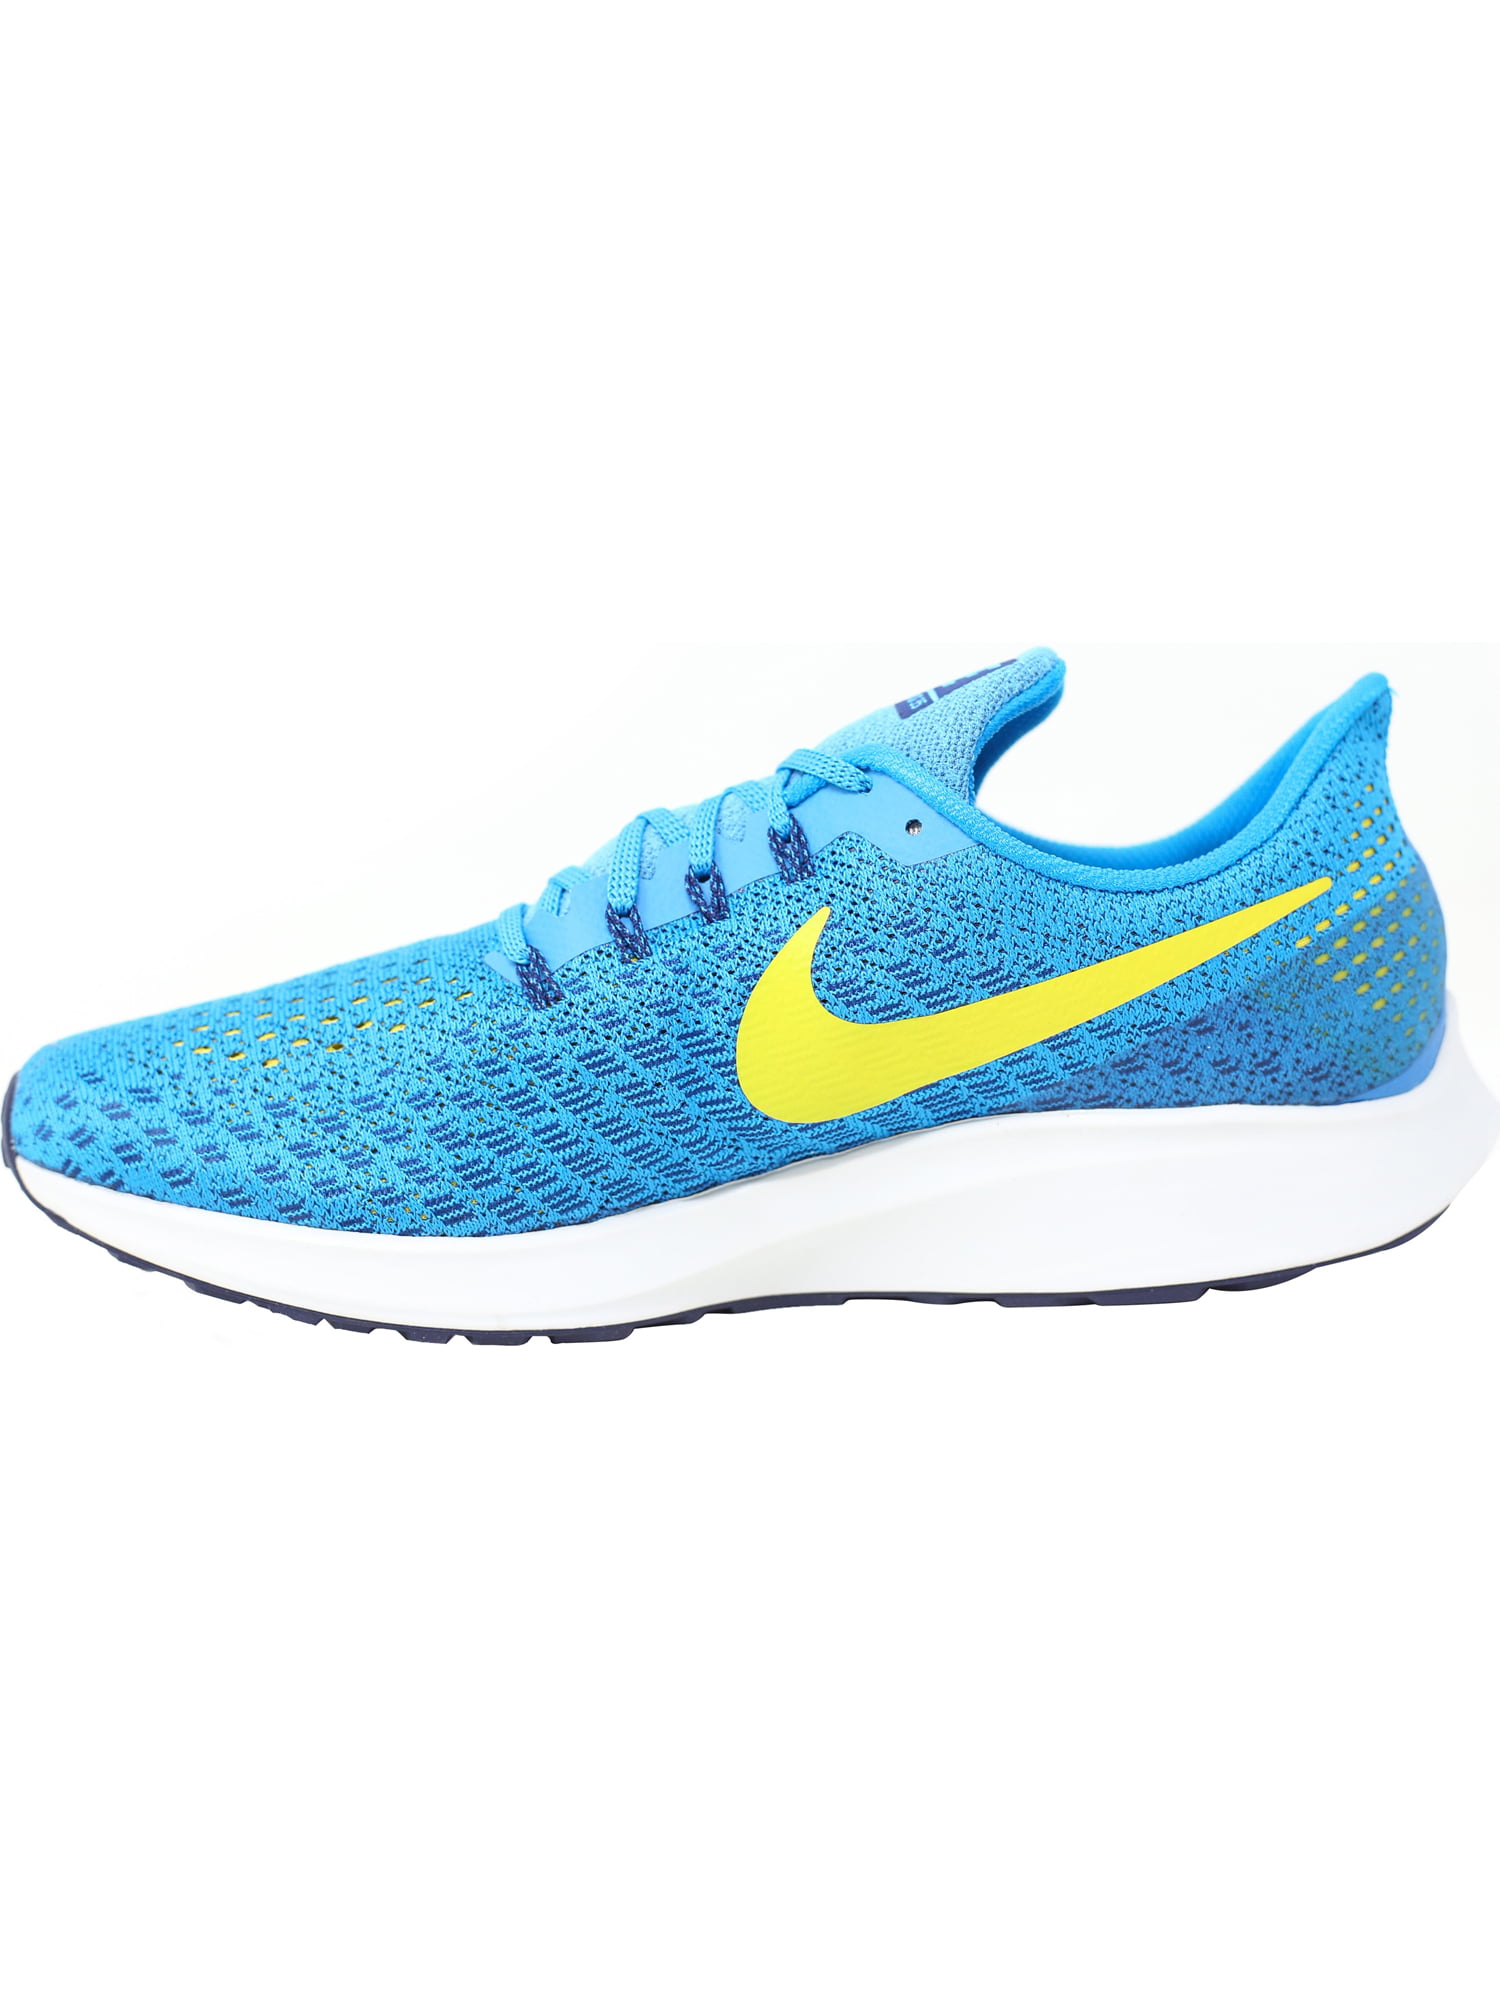 Nike Men's Air Zoom Pegasus 35 Blue Orbit / Bright Citron Ankle-High Mesh Running Shoe 12.5M - Walmart.com